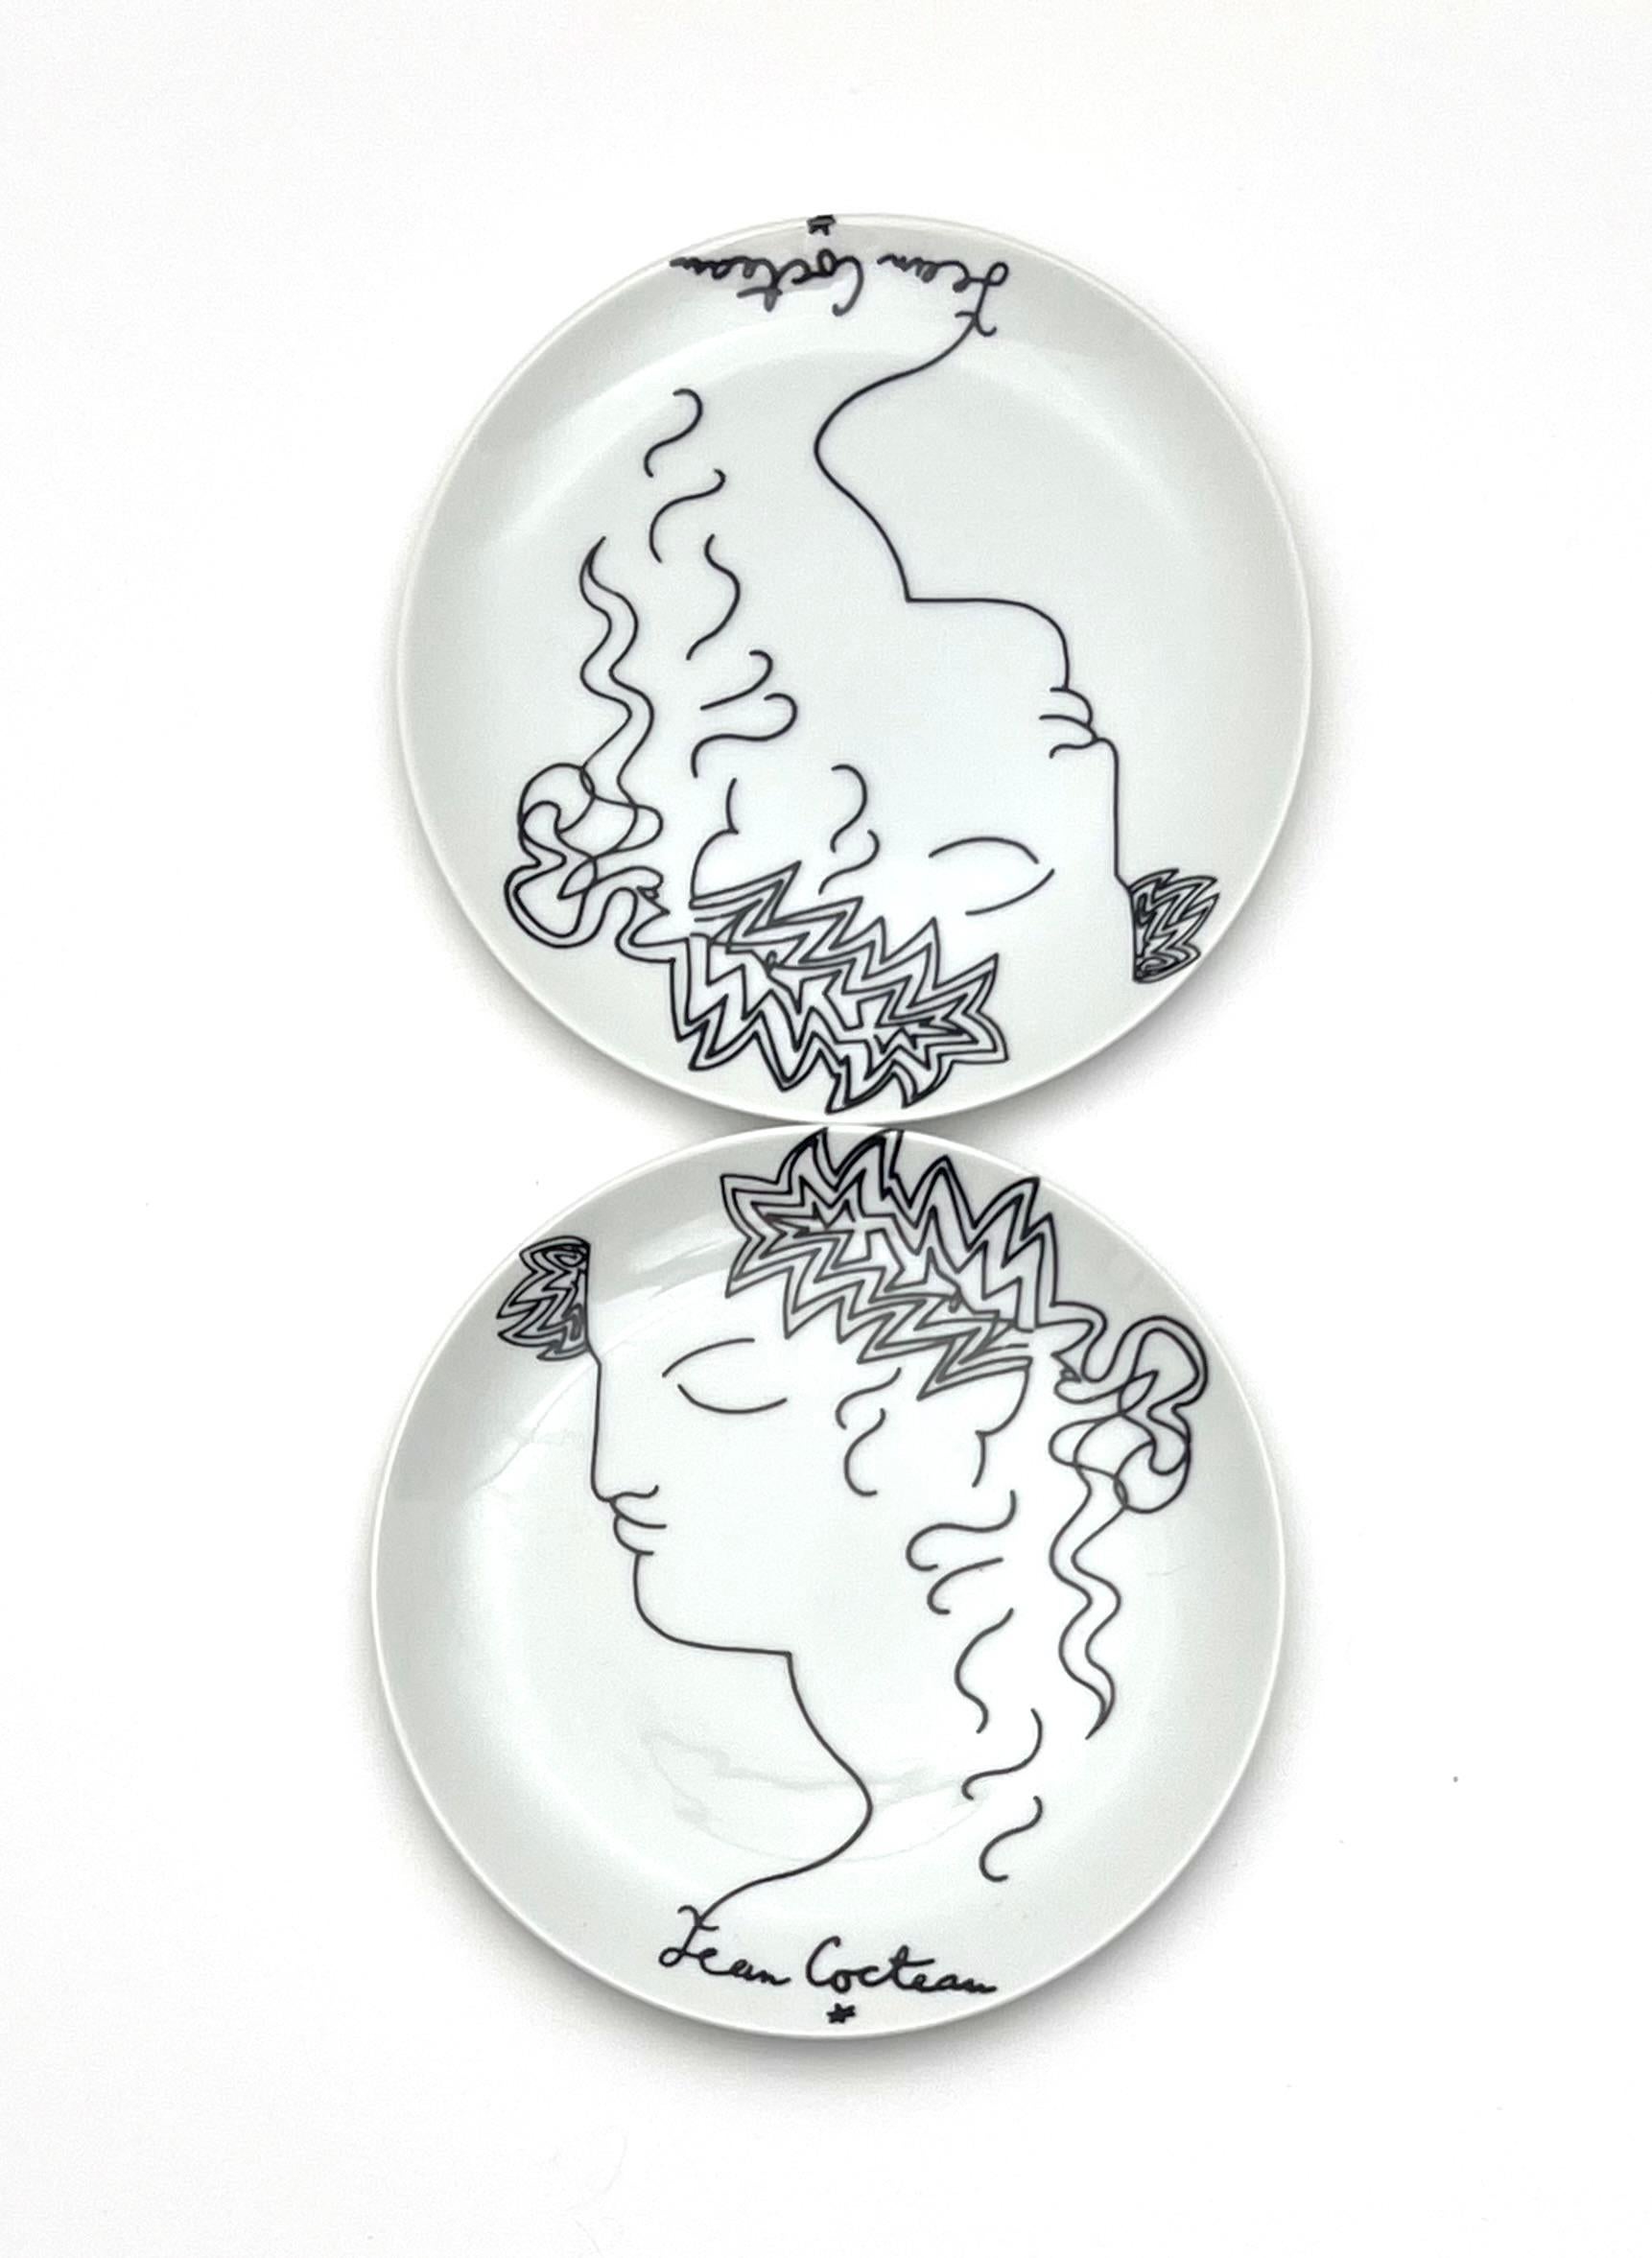 Jean Cocteau Plates by Limoges, Set of 8 2